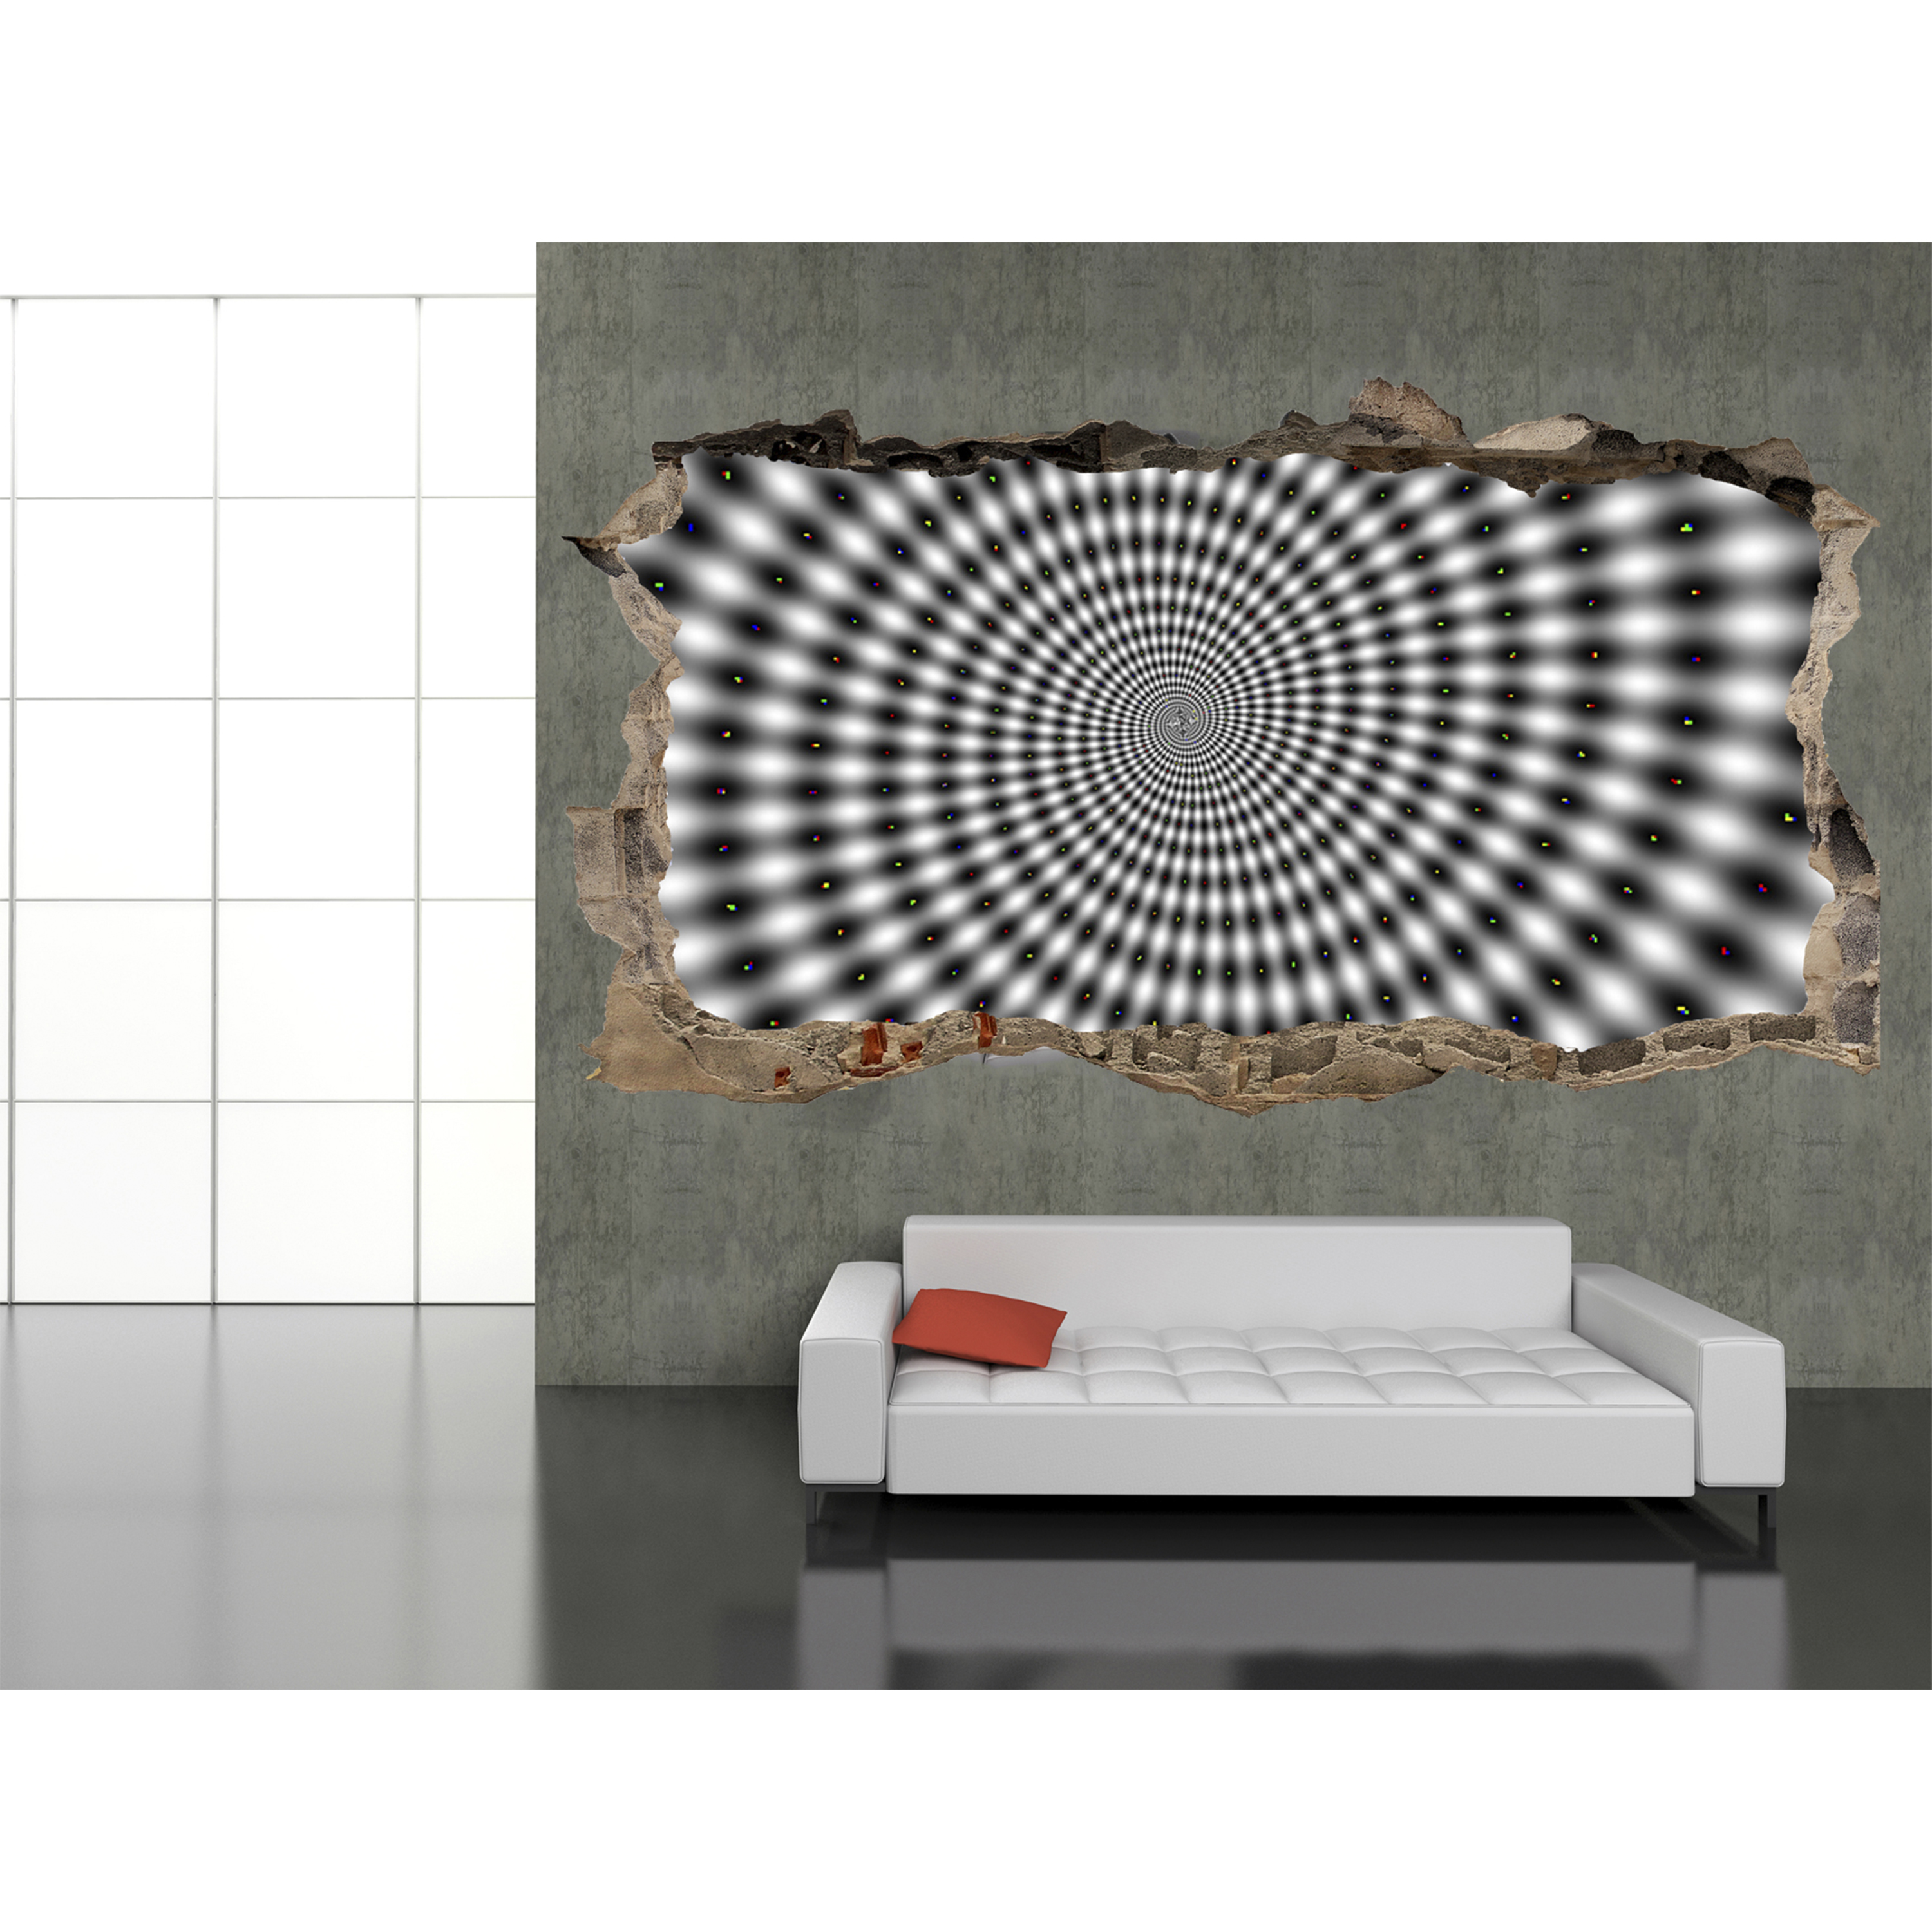 Startonight 3d Mural Wall Art Photo Decor Hypnotic - Top 3 Optical Illusions , HD Wallpaper & Backgrounds